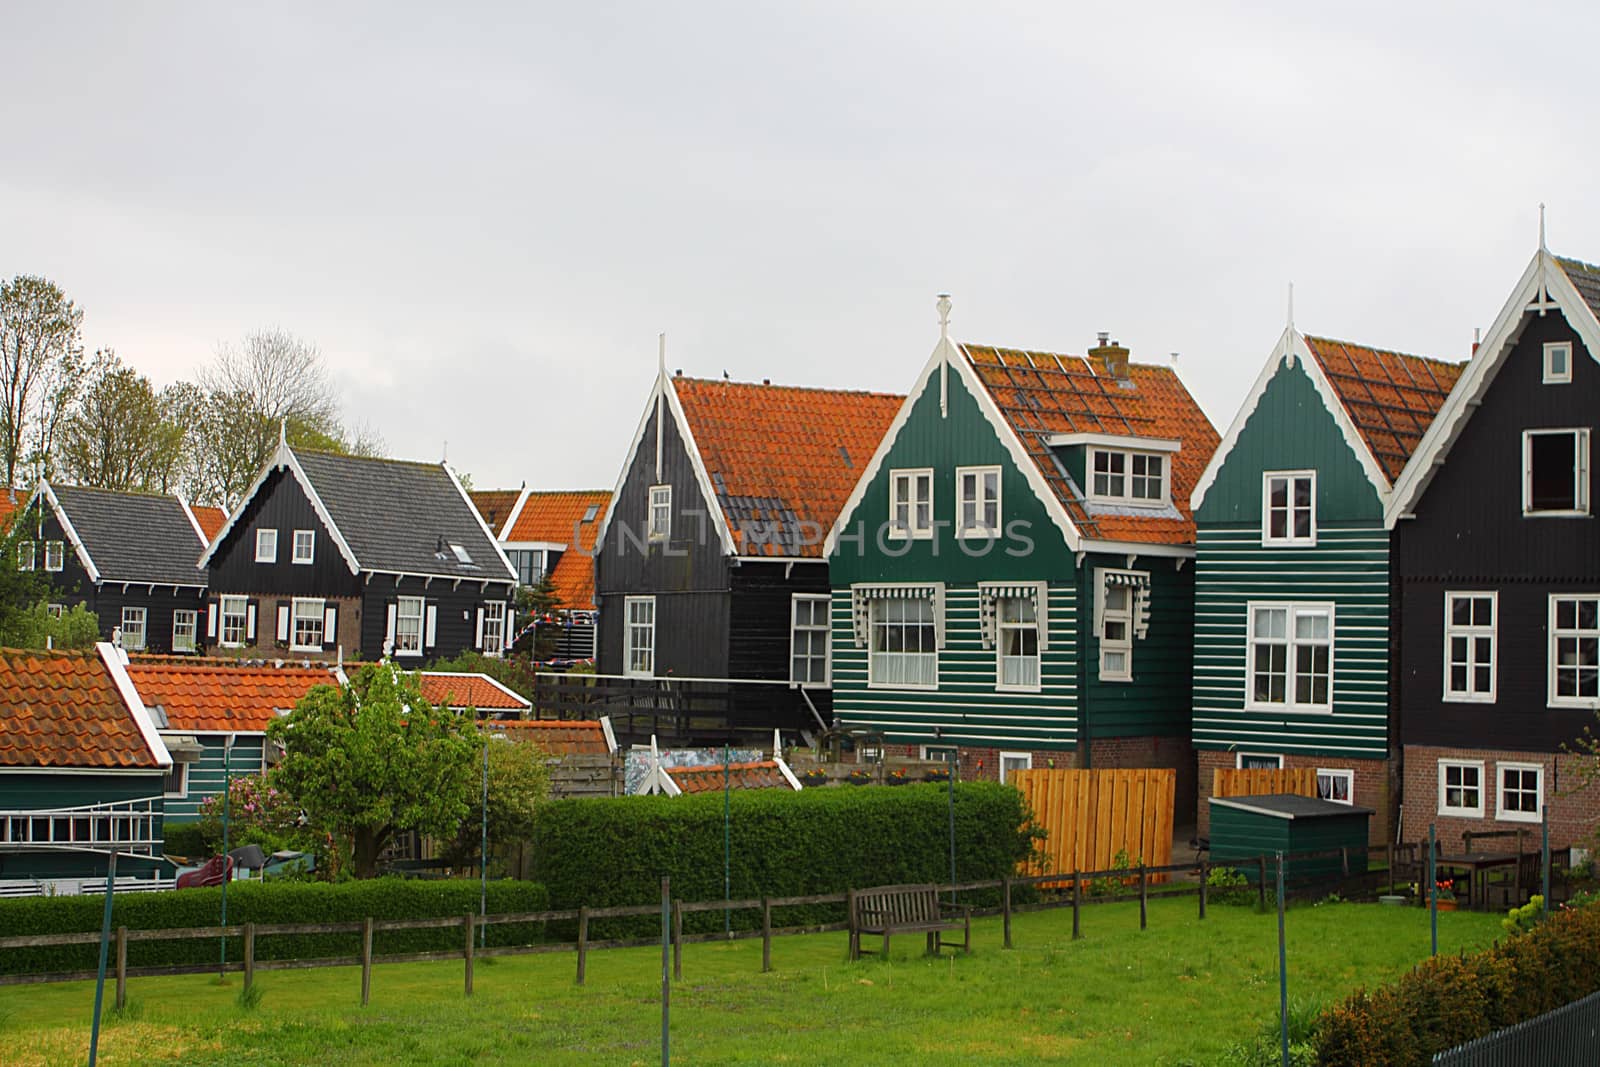 Marken,North Holland, Netherlands by Rossella